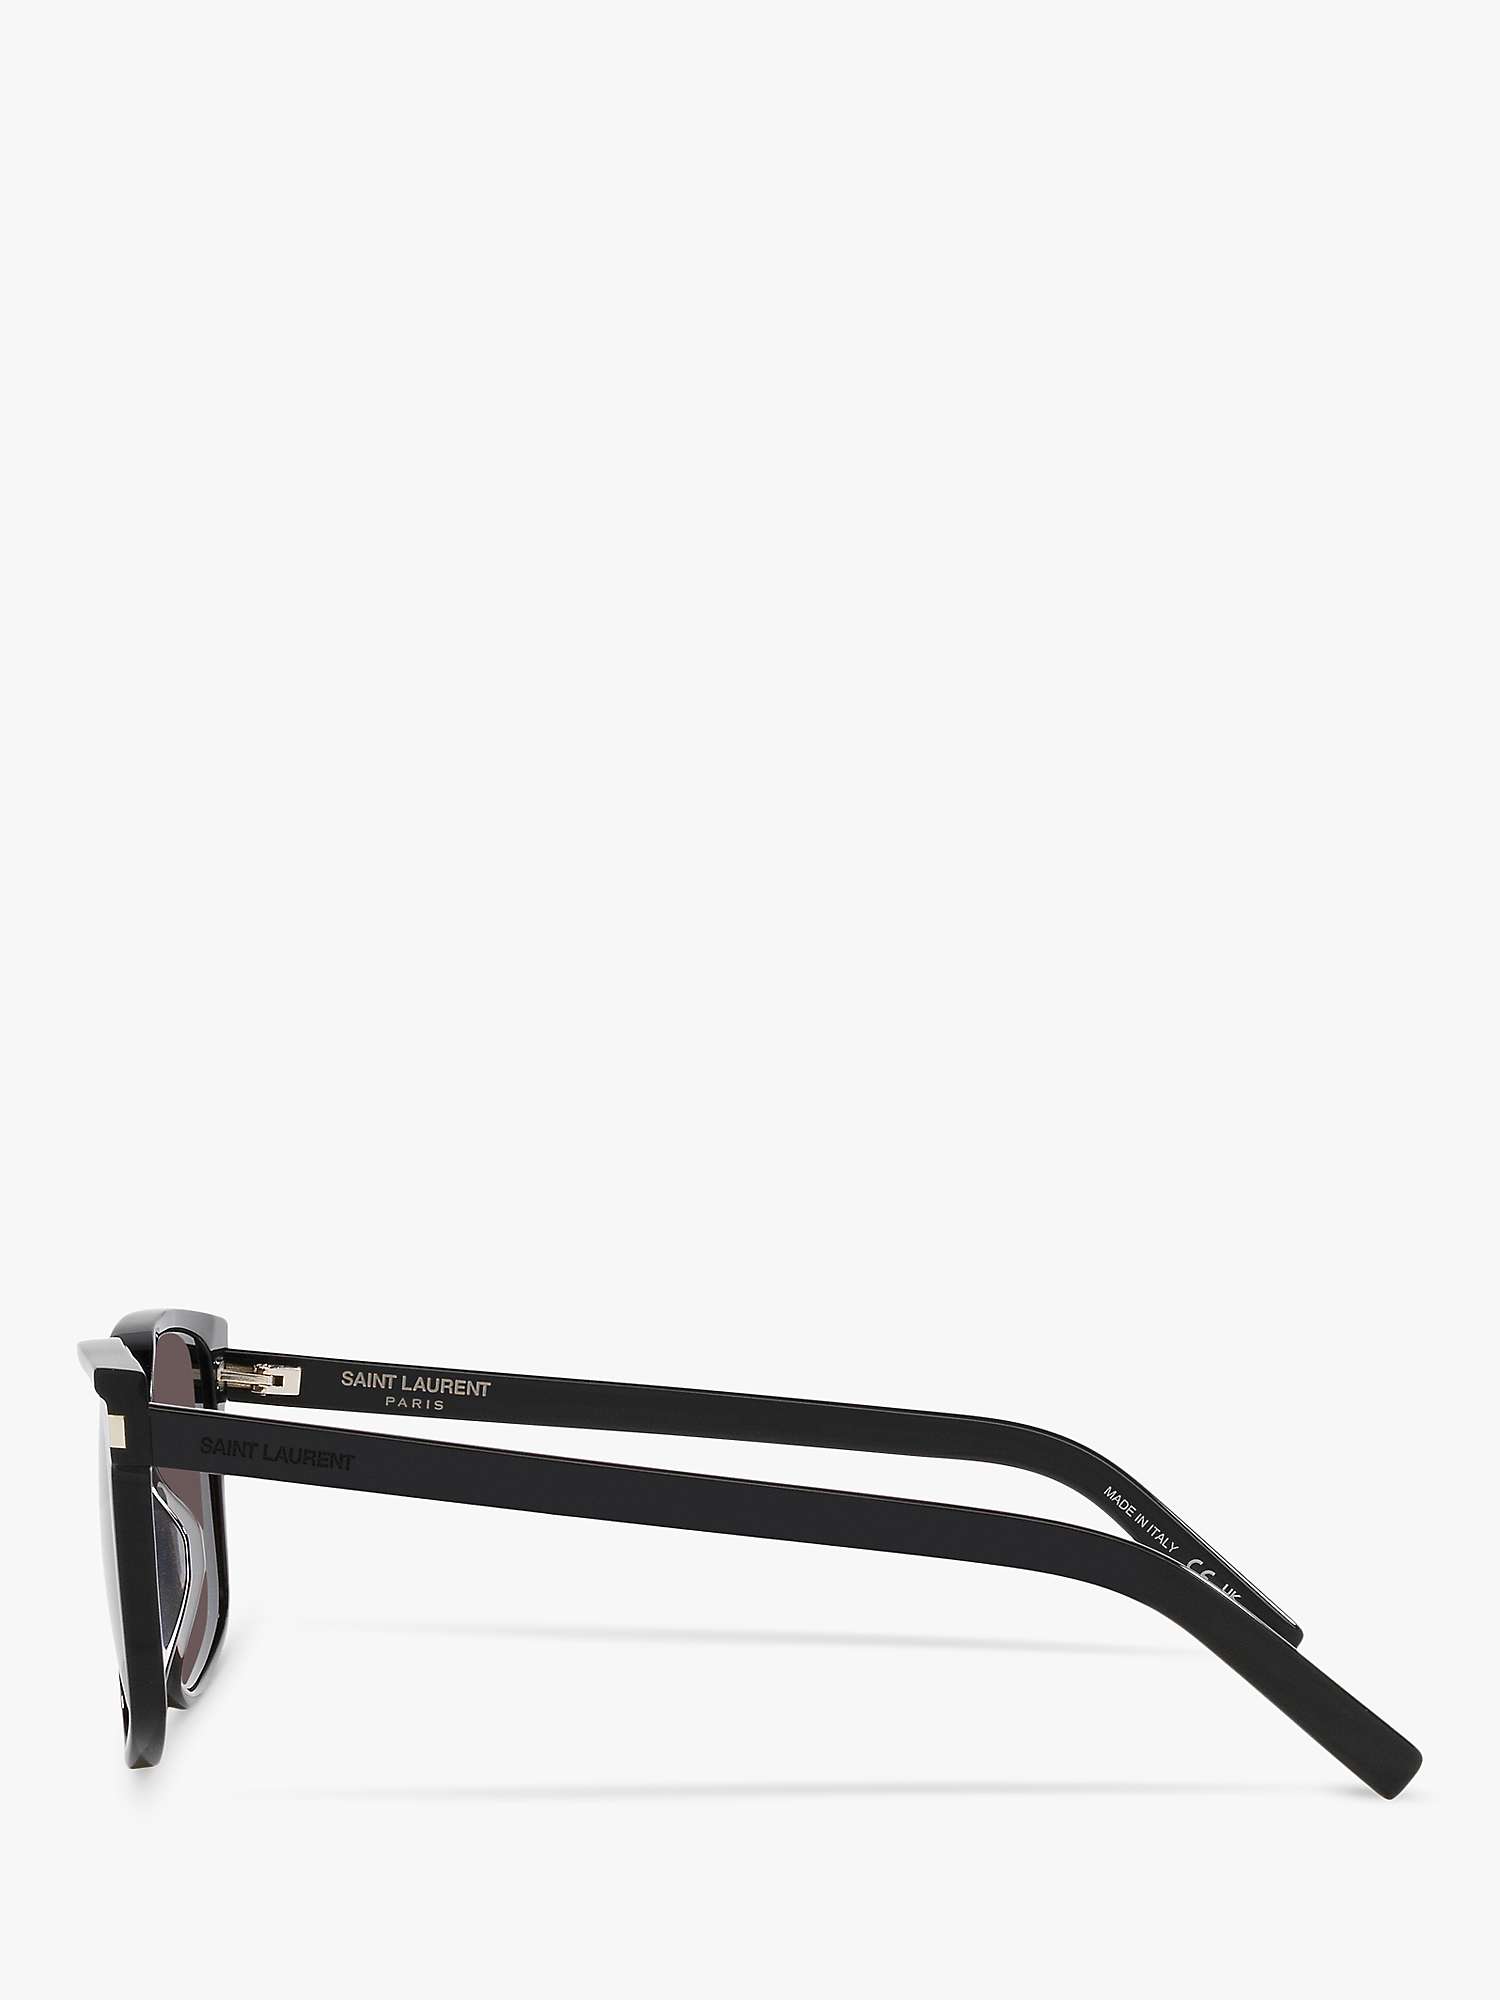 Buy Yves Saint Laurent YS000476 Men's Square Sunglasses, Black/Grey Online at johnlewis.com